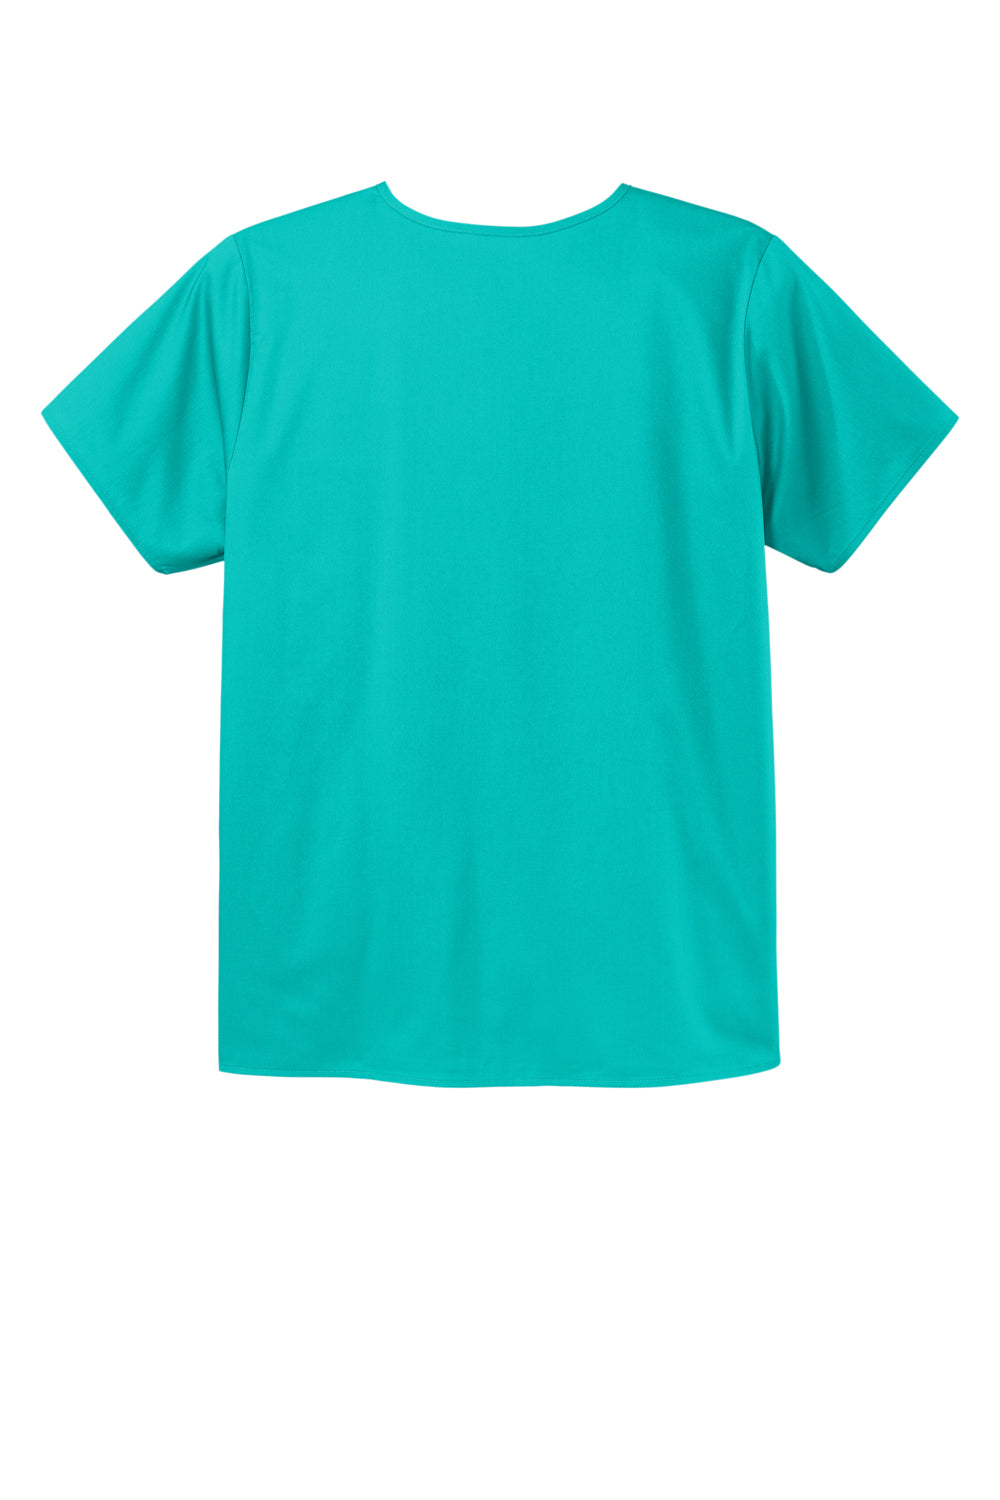 Wonderwink WW3160 WorkFlex Short Sleeve V-Neck Shirt w/ Pocket Teal Blue Flat Back